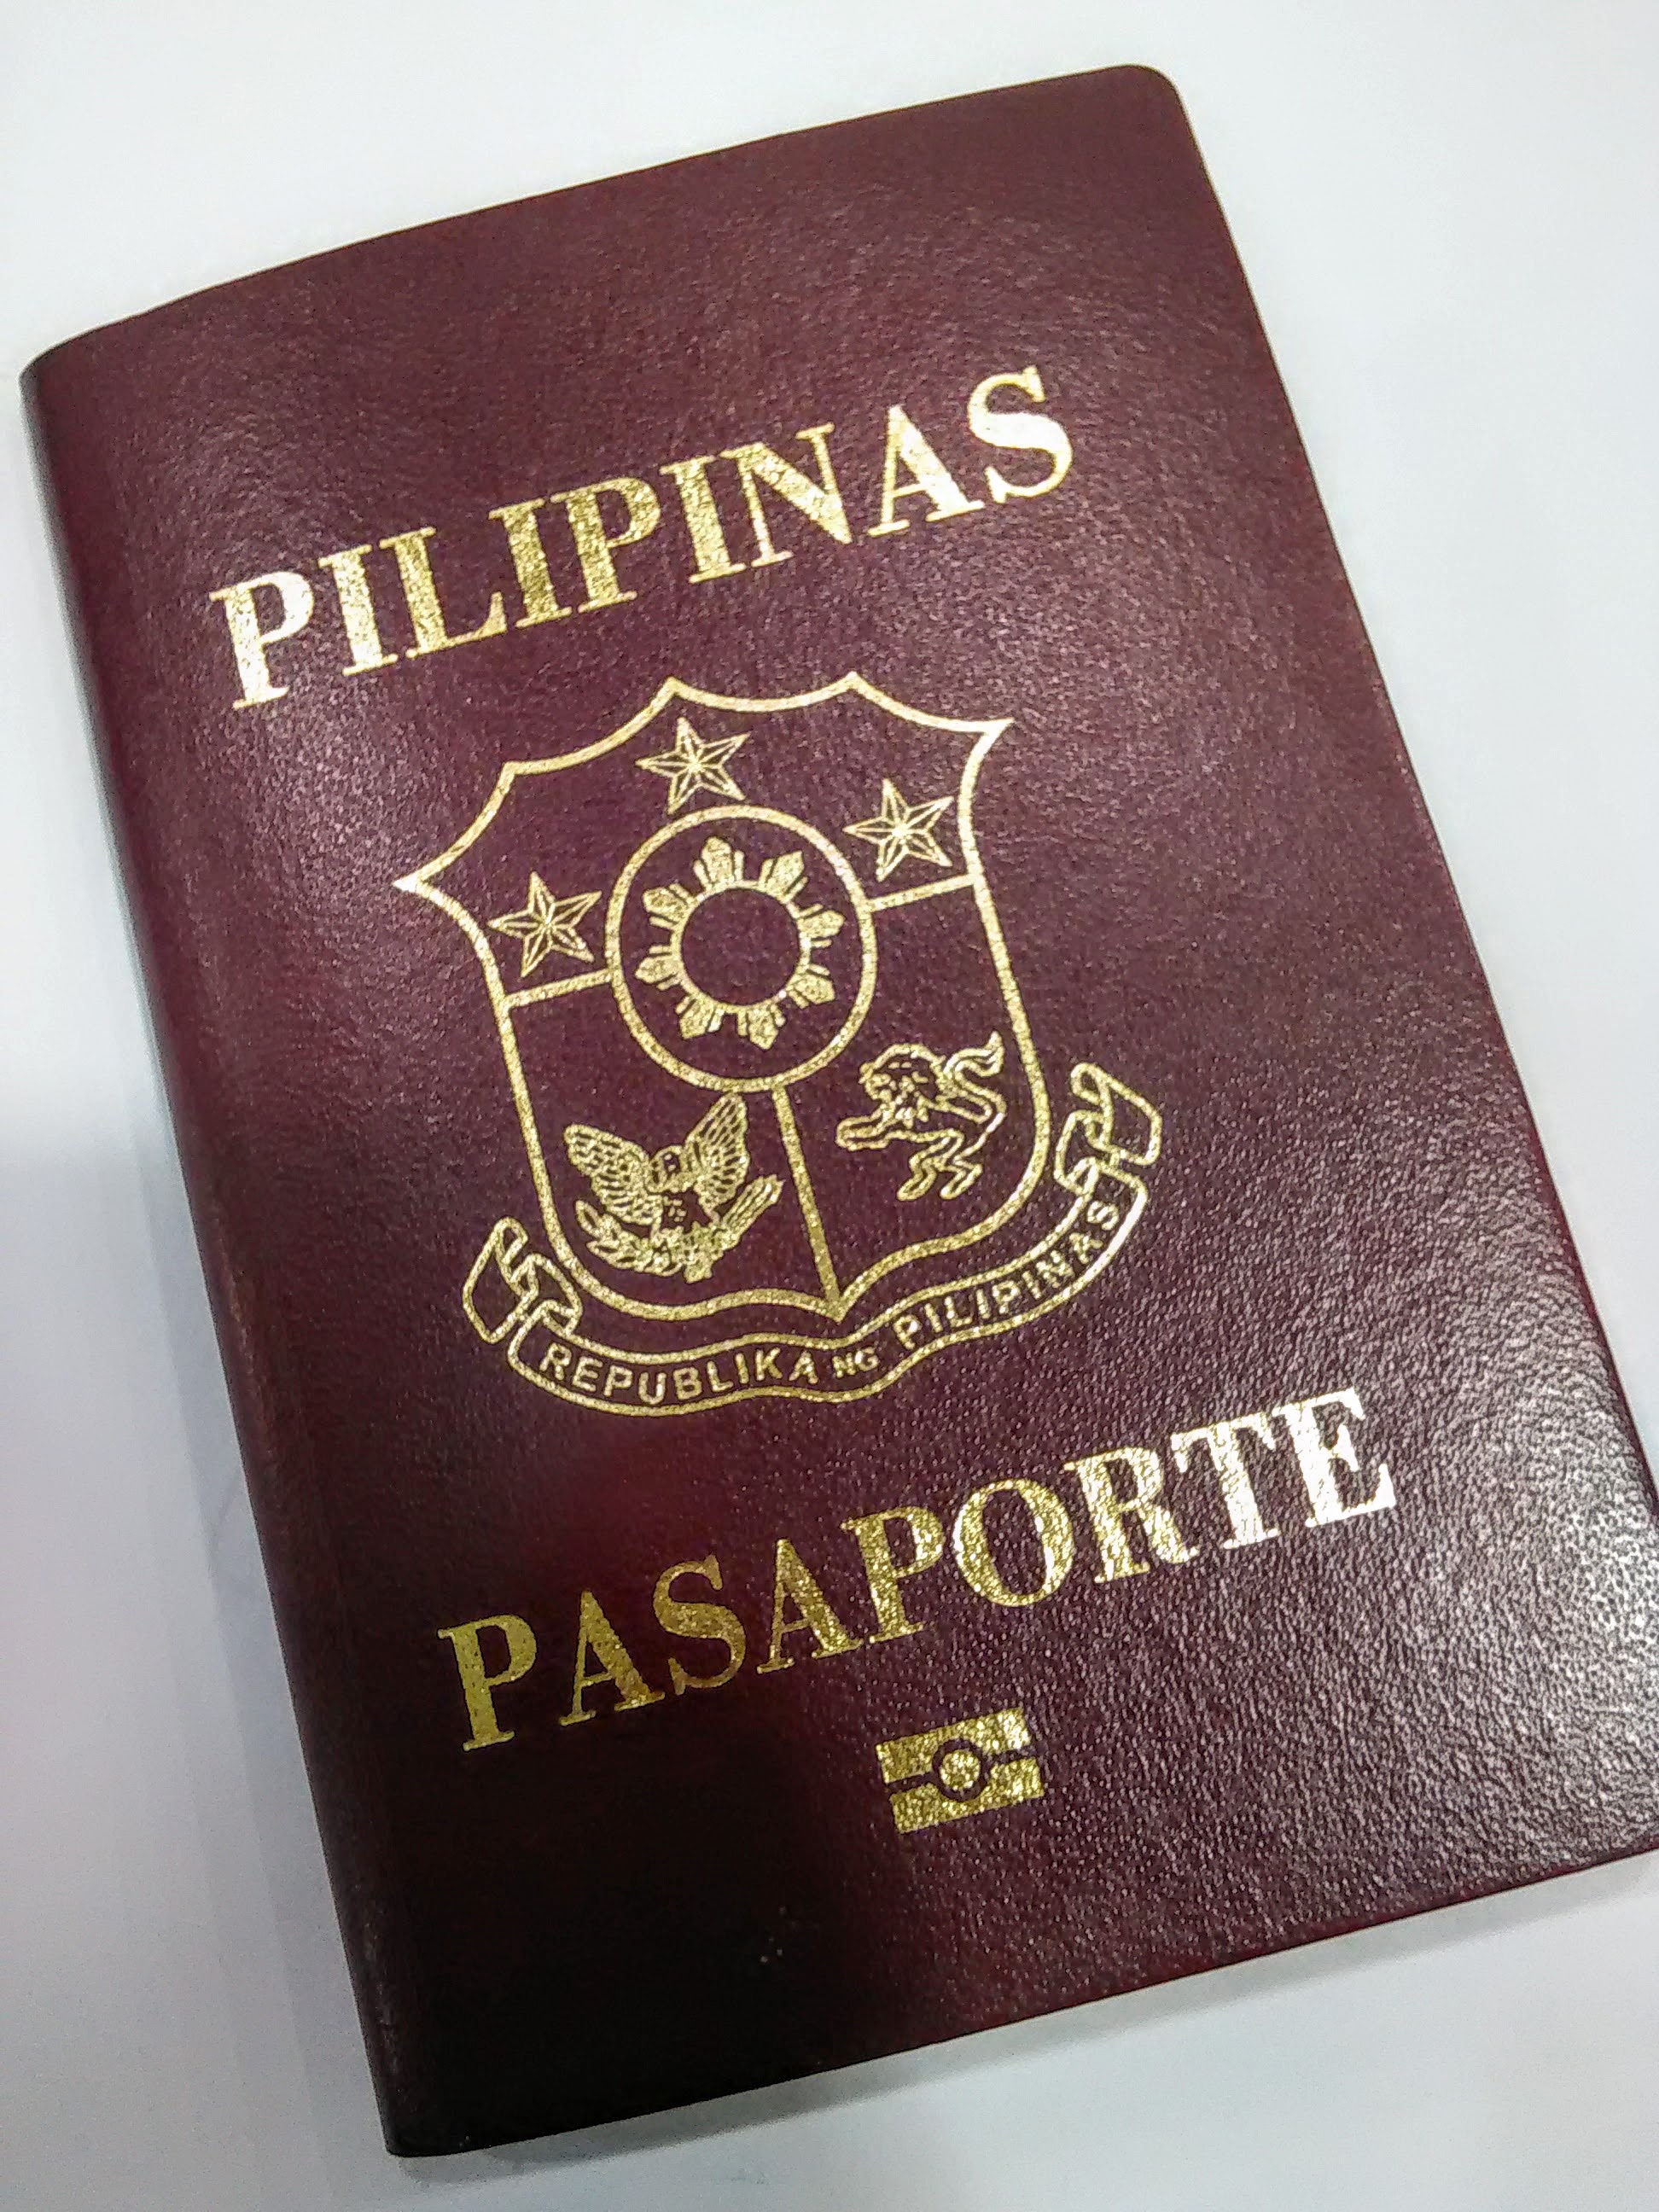 Philippine Passport Renewal